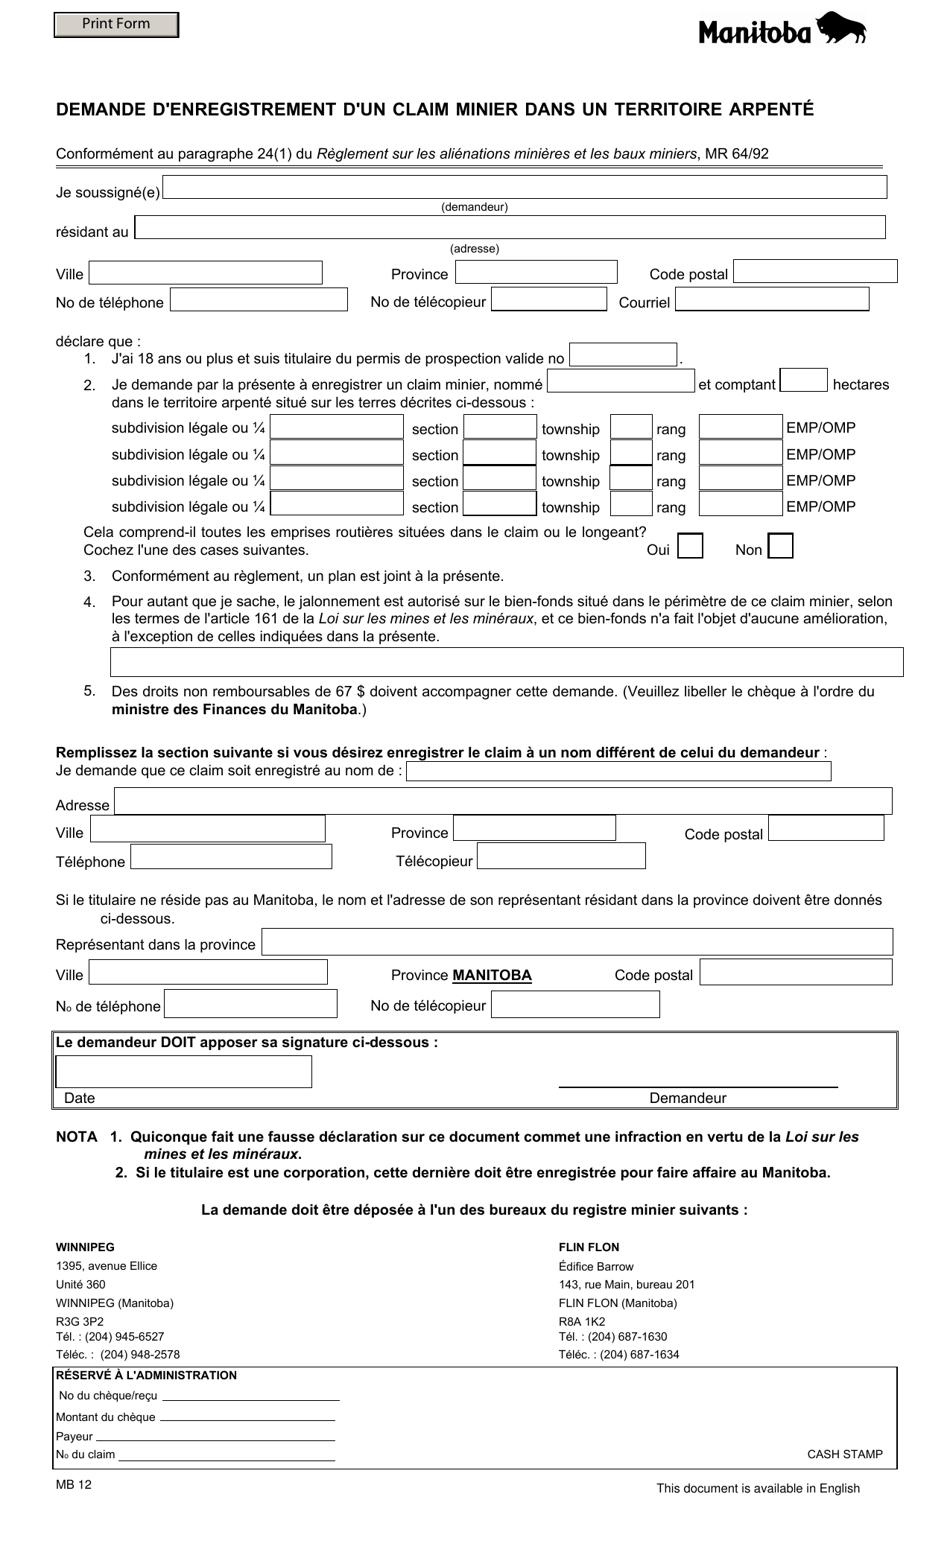 Forme MB12 Demande Denregistrement Dun Claim Minier Dans Un Territoire Arpente - Manitoba, Canada (French), Page 1